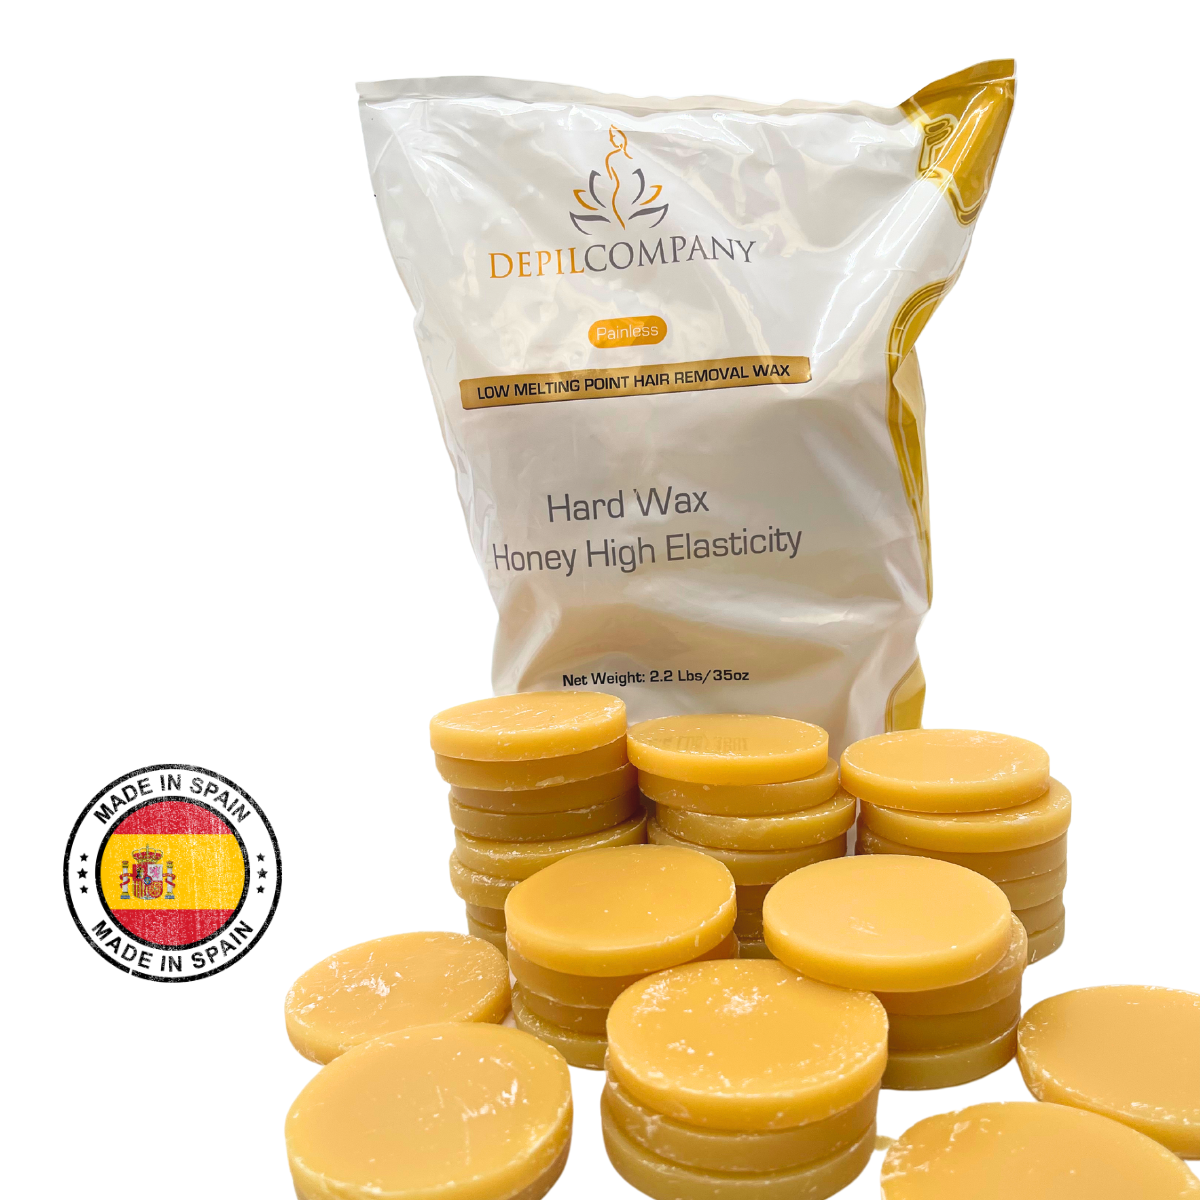 Professional honey hard wax discs by Depilcompany, 2.2 lbs